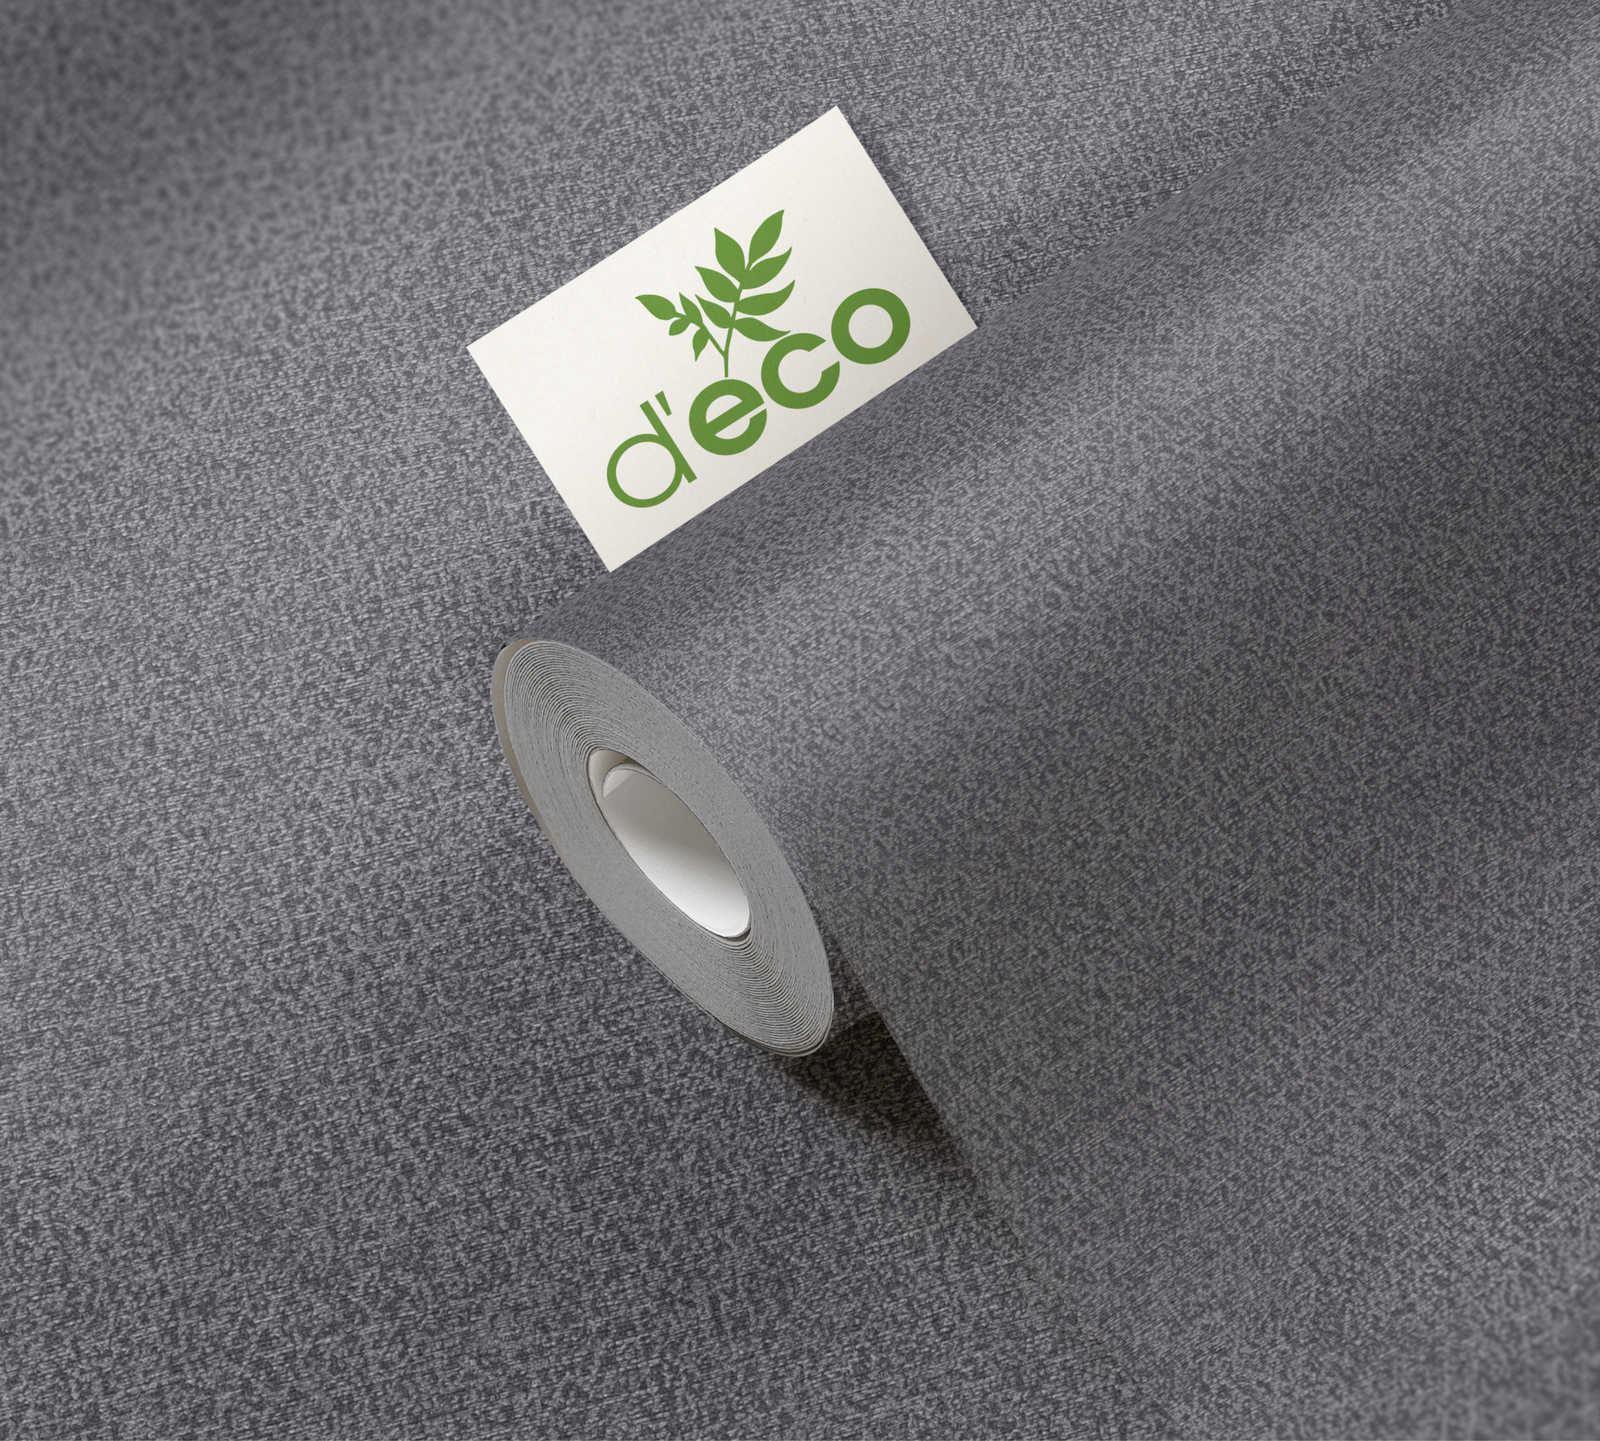             Papel pintado no tejido sin PVC con motivo brillante - negro, plata
        